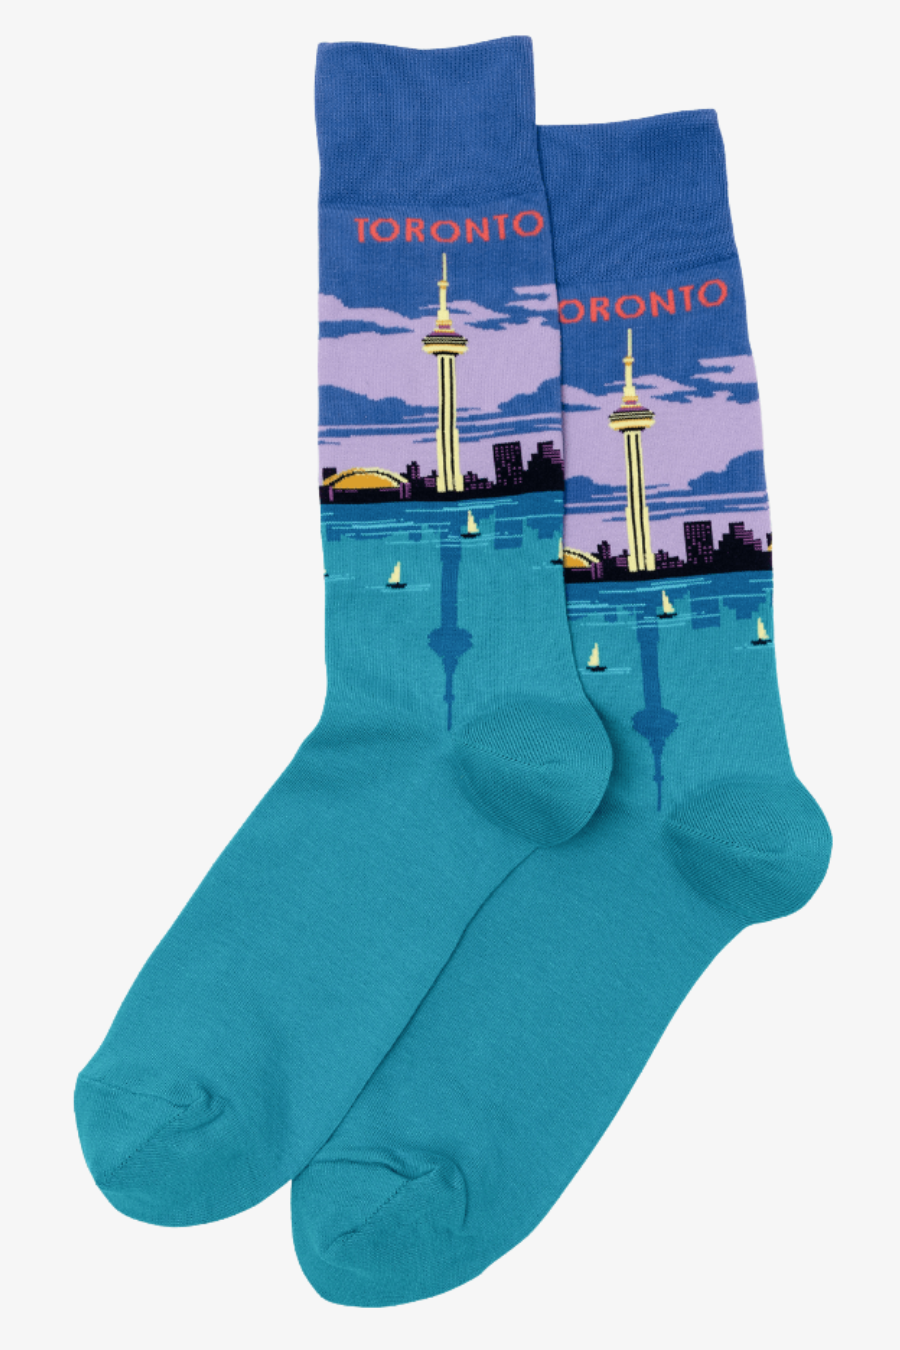 Toronto Socks